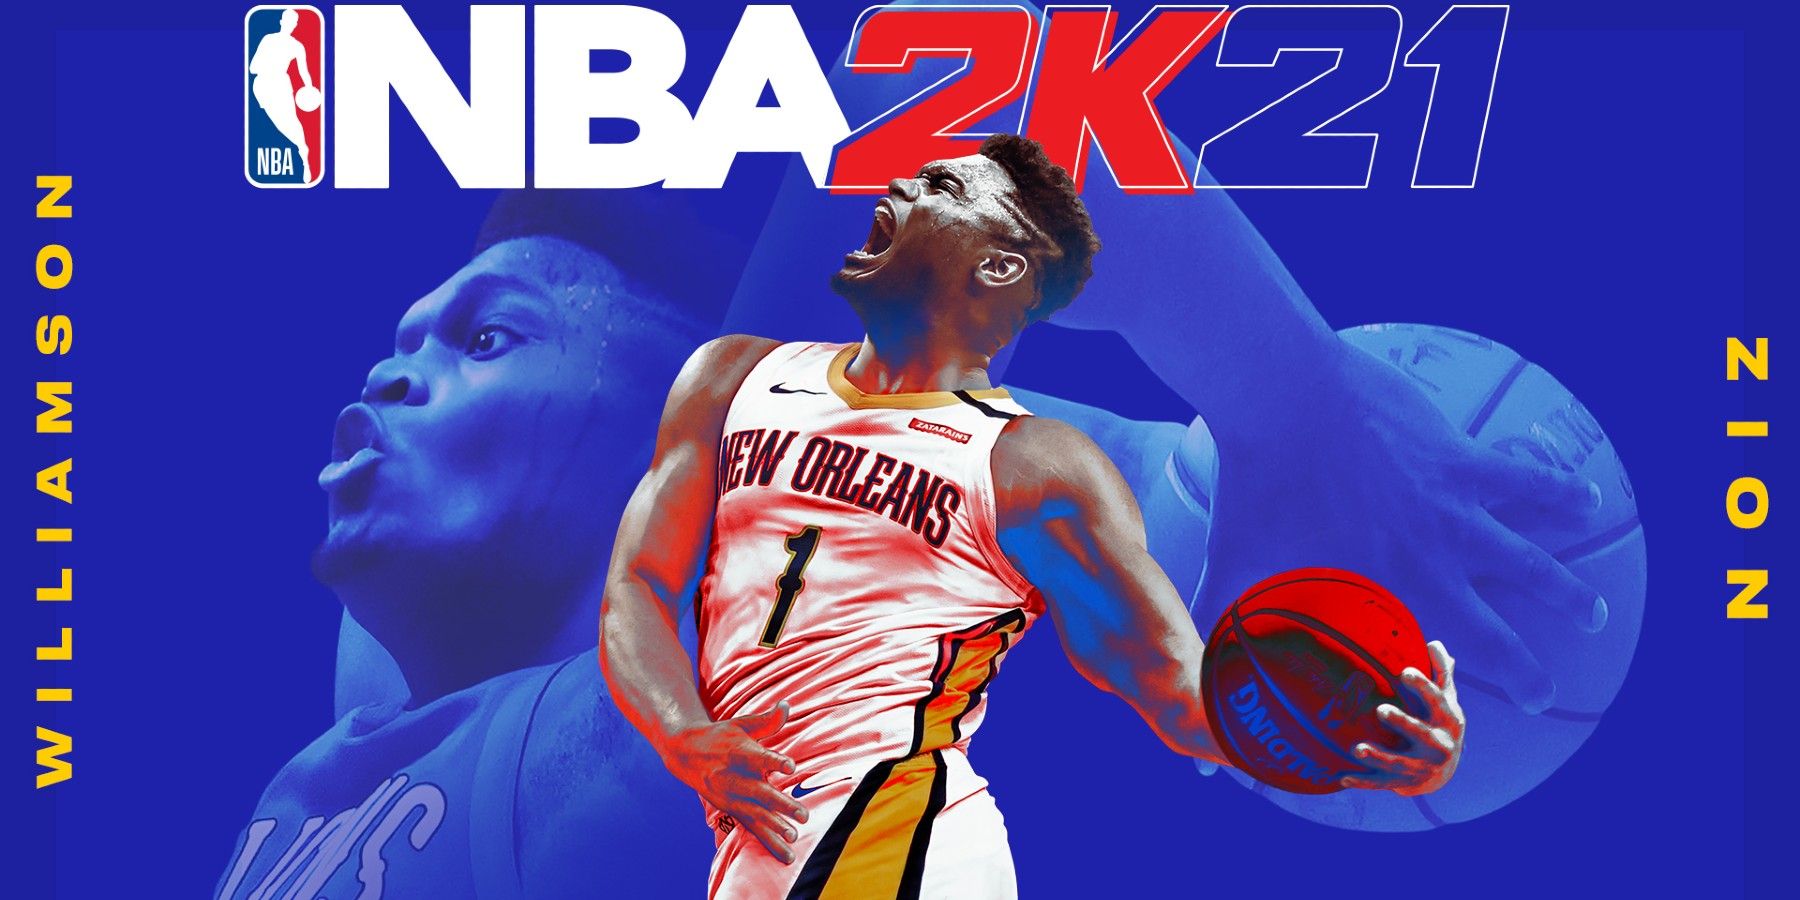 NBA 2K21 Names Zion Williamson As Cover Athlete For Next-Gen Consoles